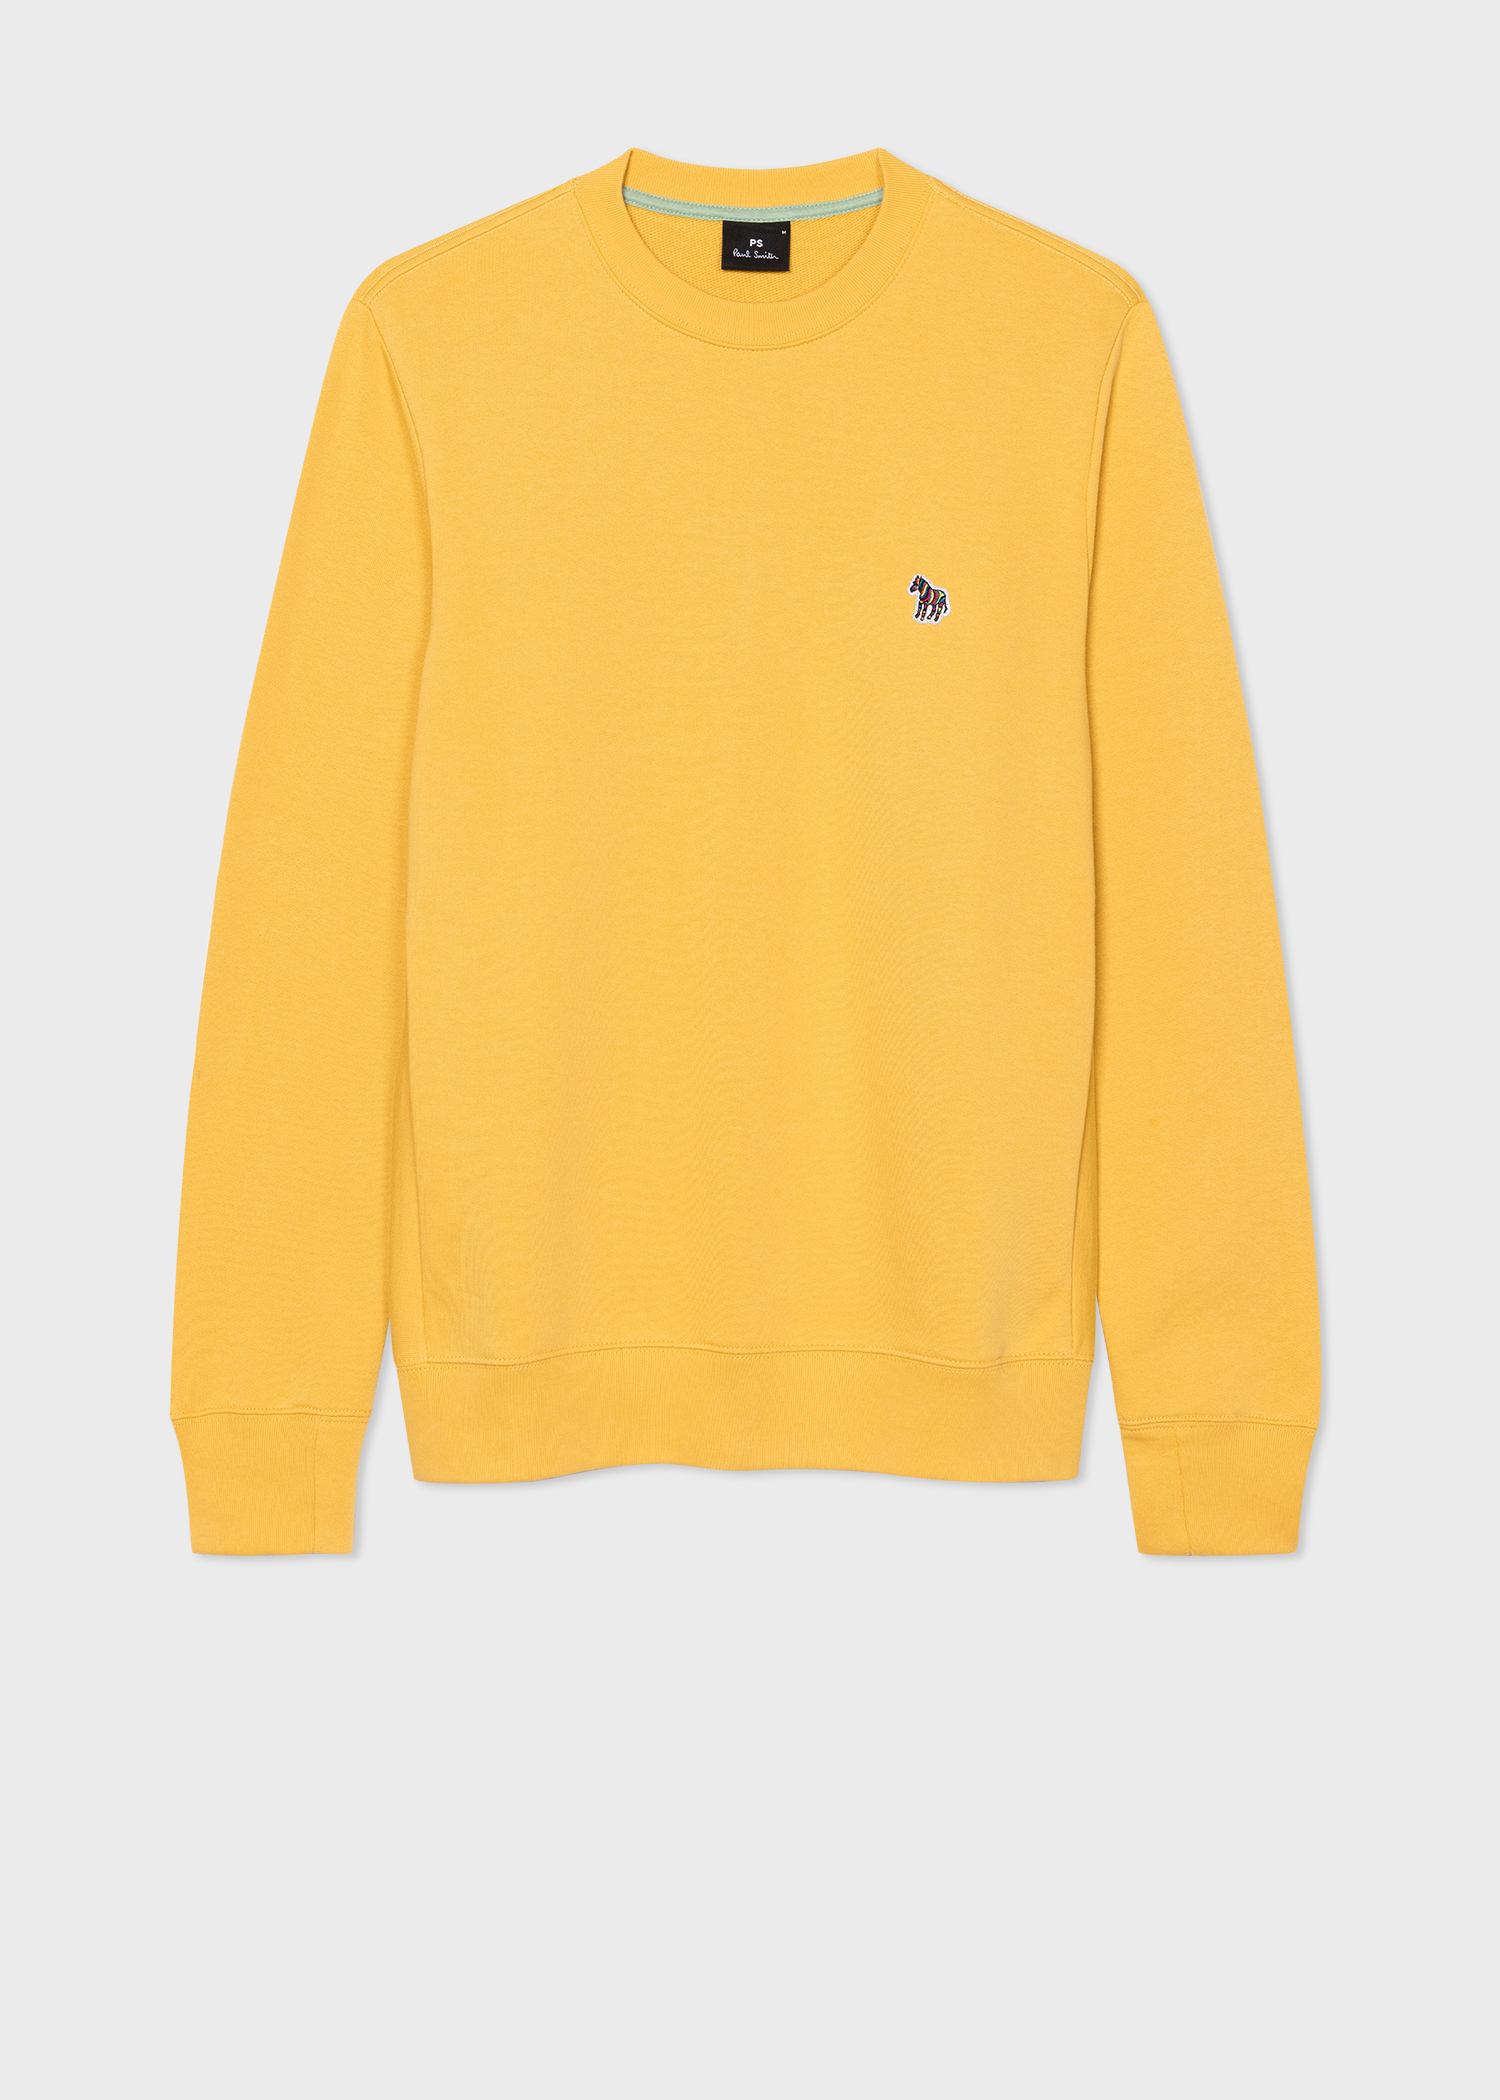 Men's Yellow Zebra Logo Organic Cotton Sweatshirt